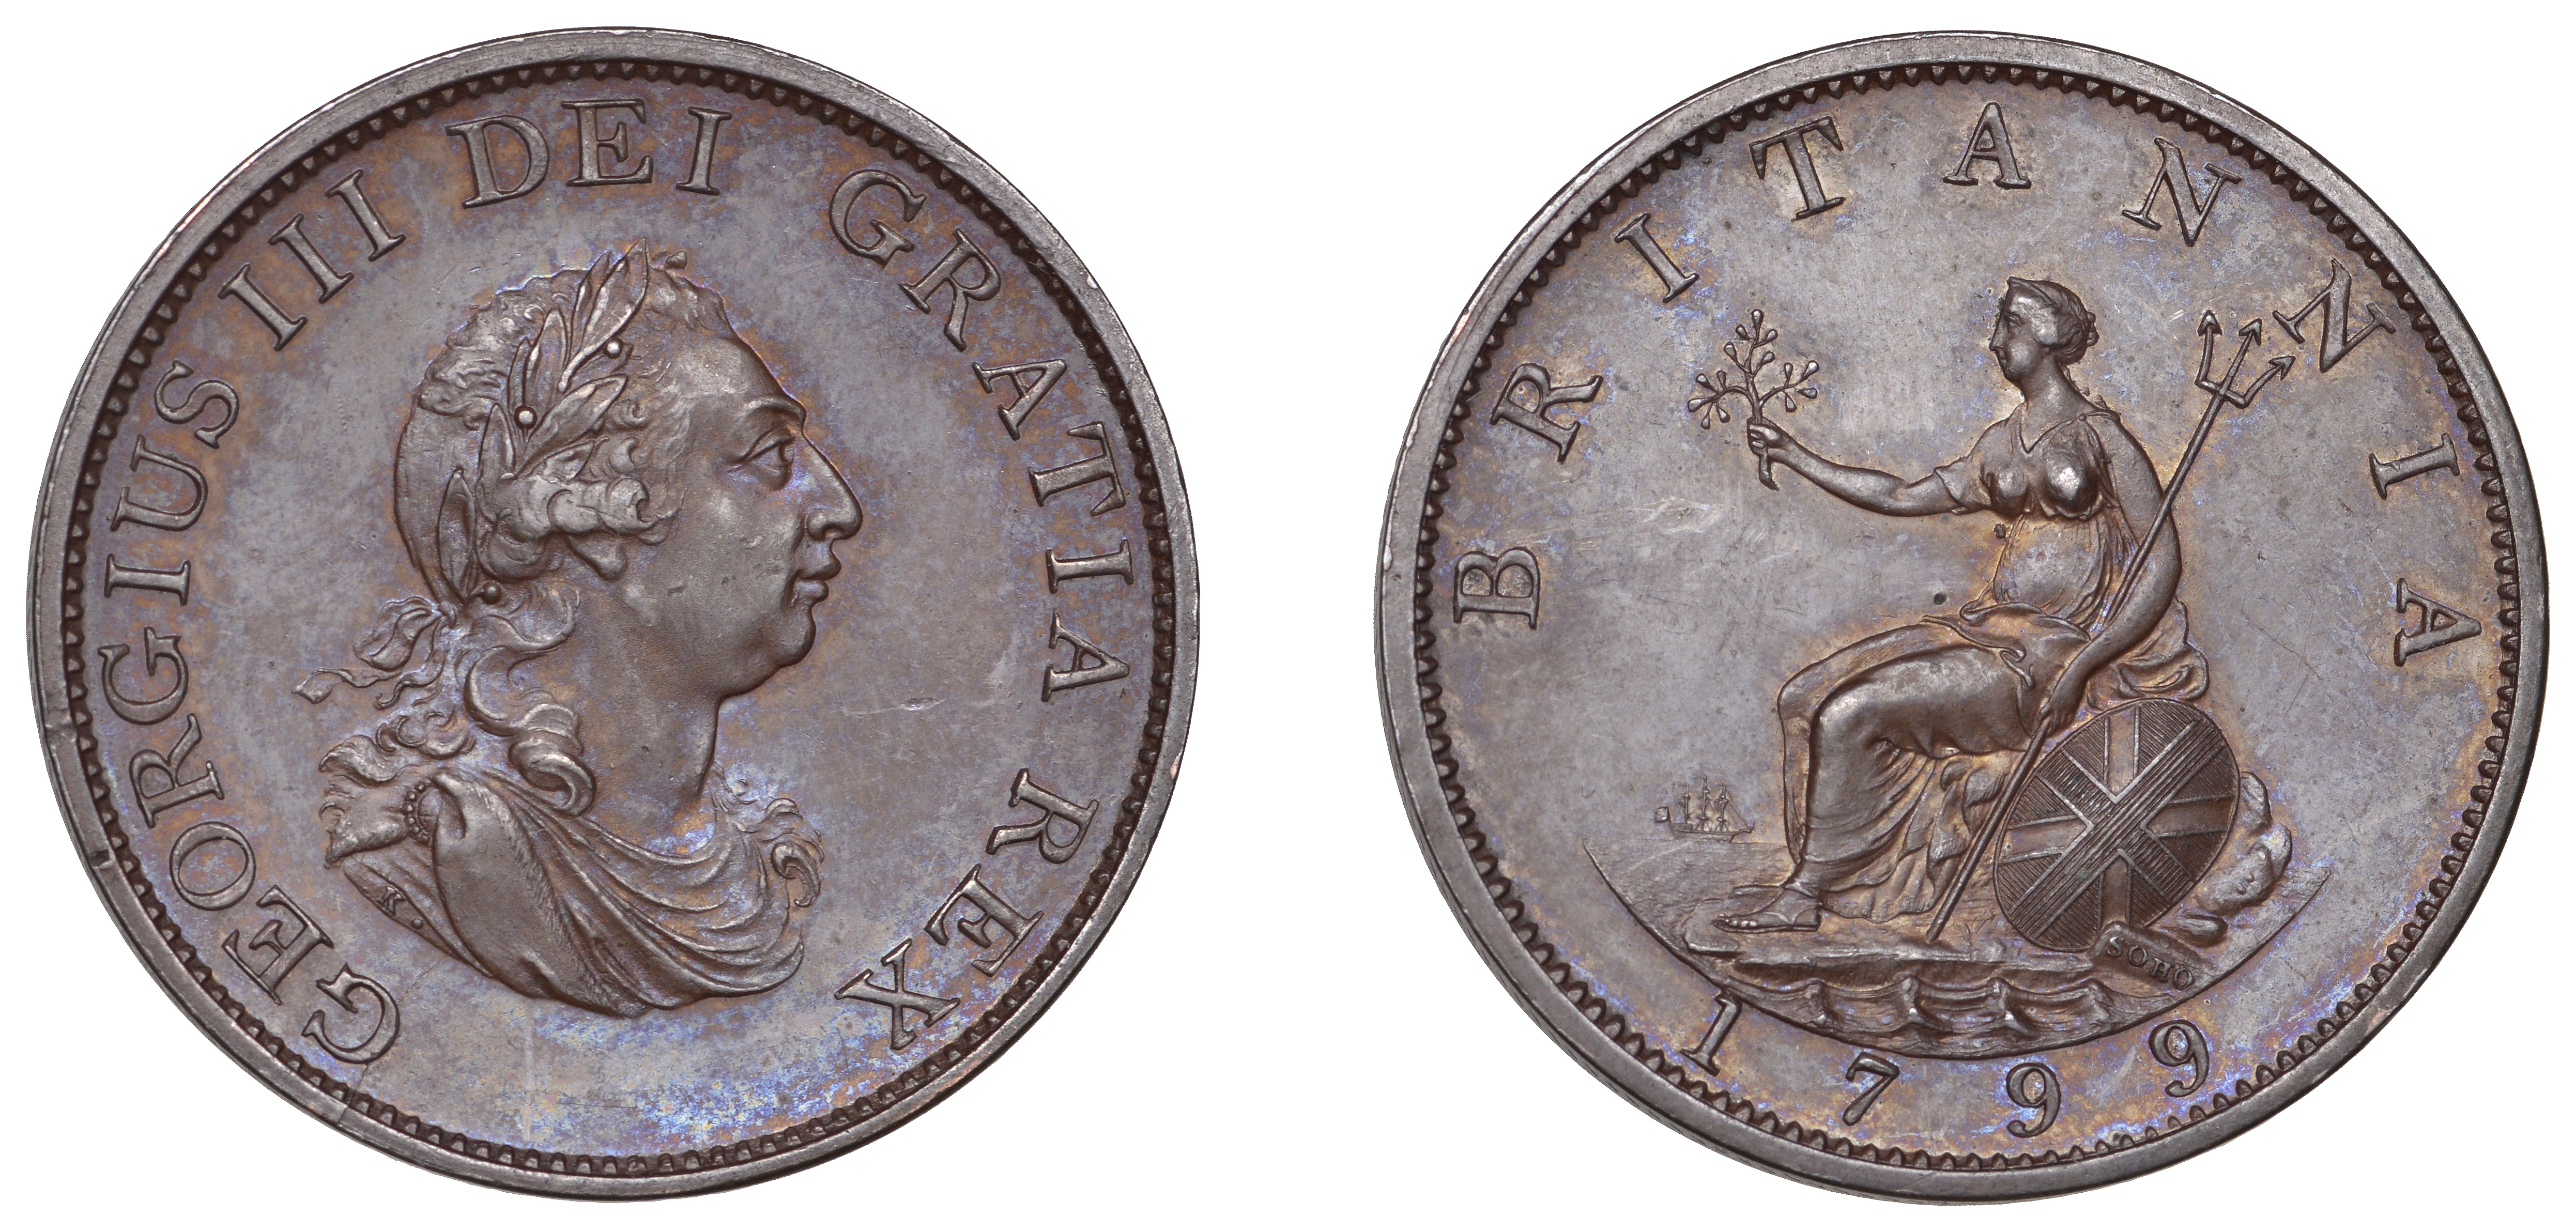 George III (1760-1820), Pre-1816 issues, Pattern Halfpenny, 1799 (late Soho), in bronzed cop...